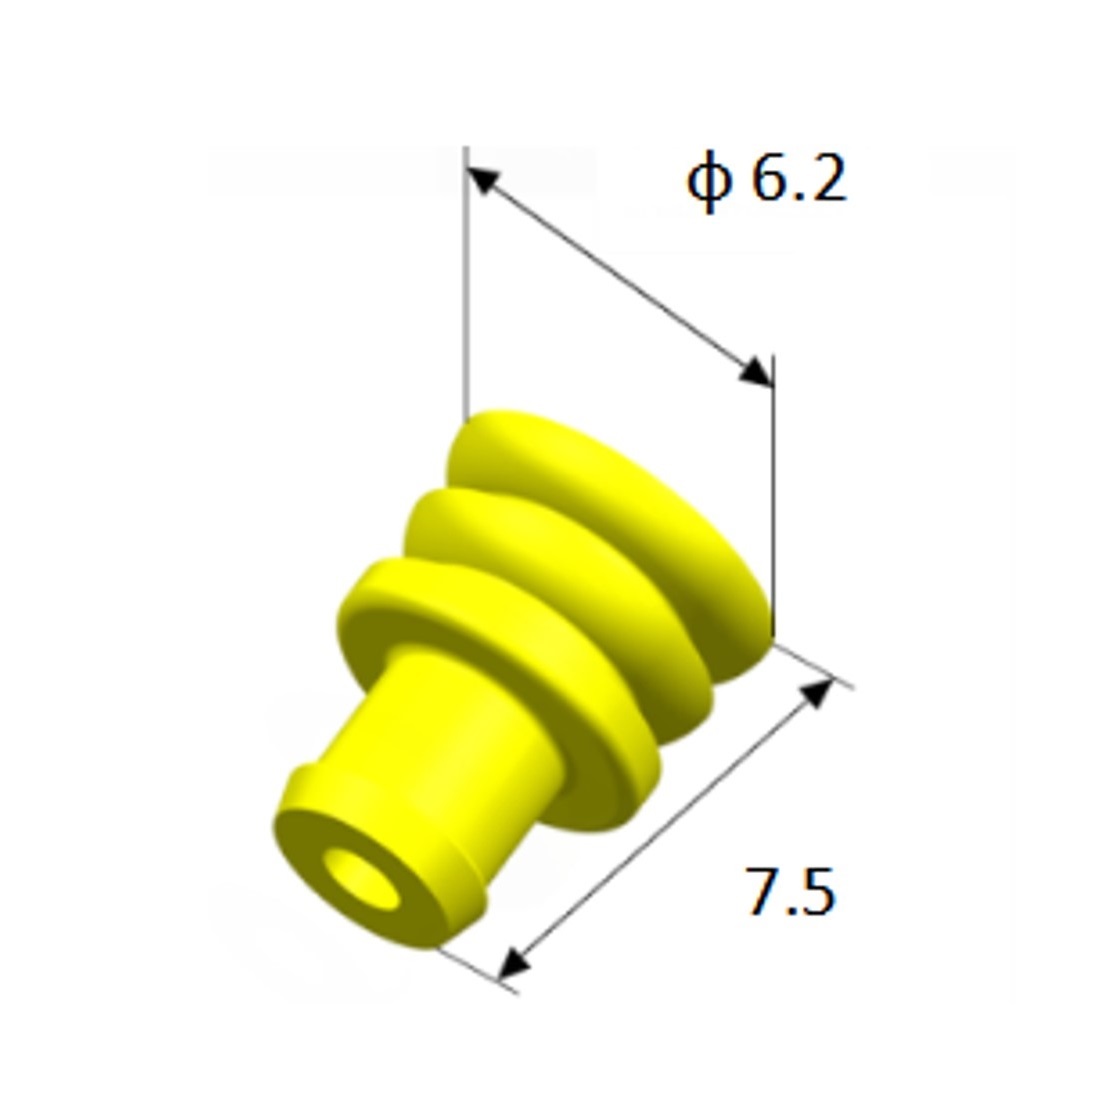 EFWS06208 Automotive Seals & Cavity Plugs, Single Wire Seal, LSR, Yellow, Cavity Diameter 1.3